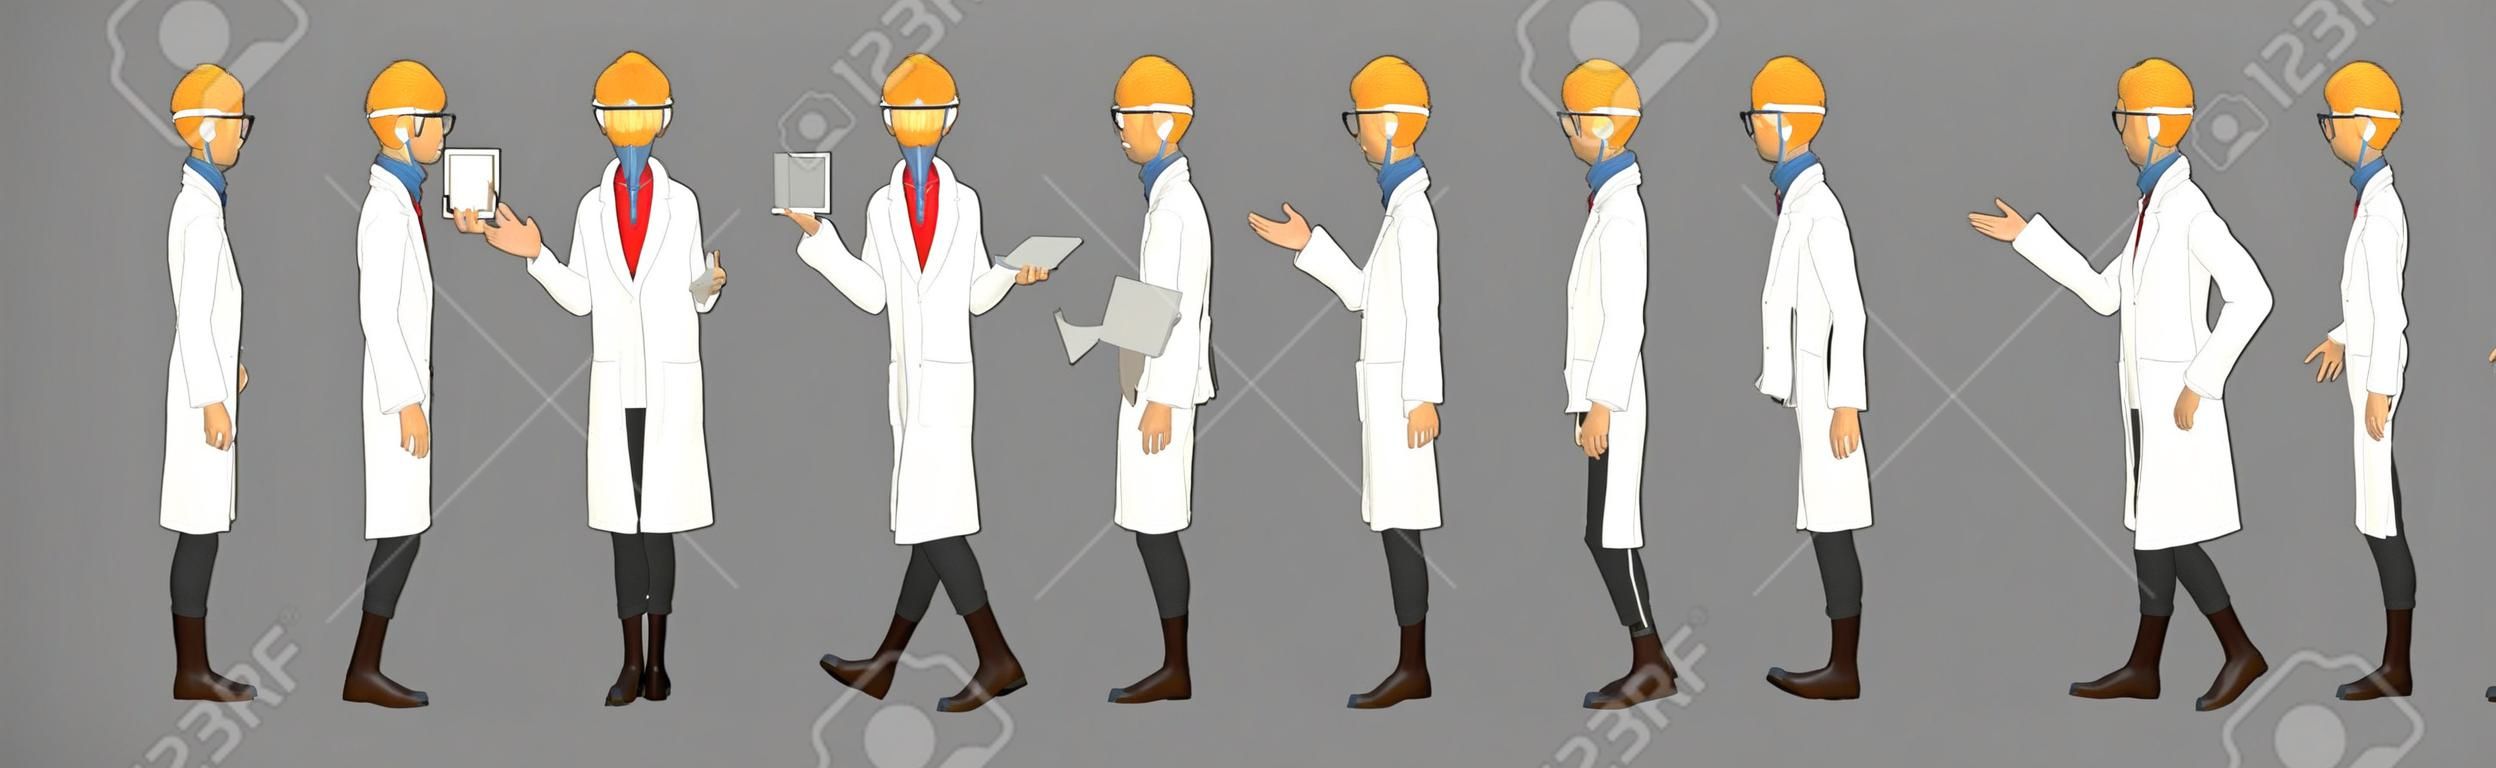 Scientist Character Model Sheet met Walk cycle Animatie Sequence